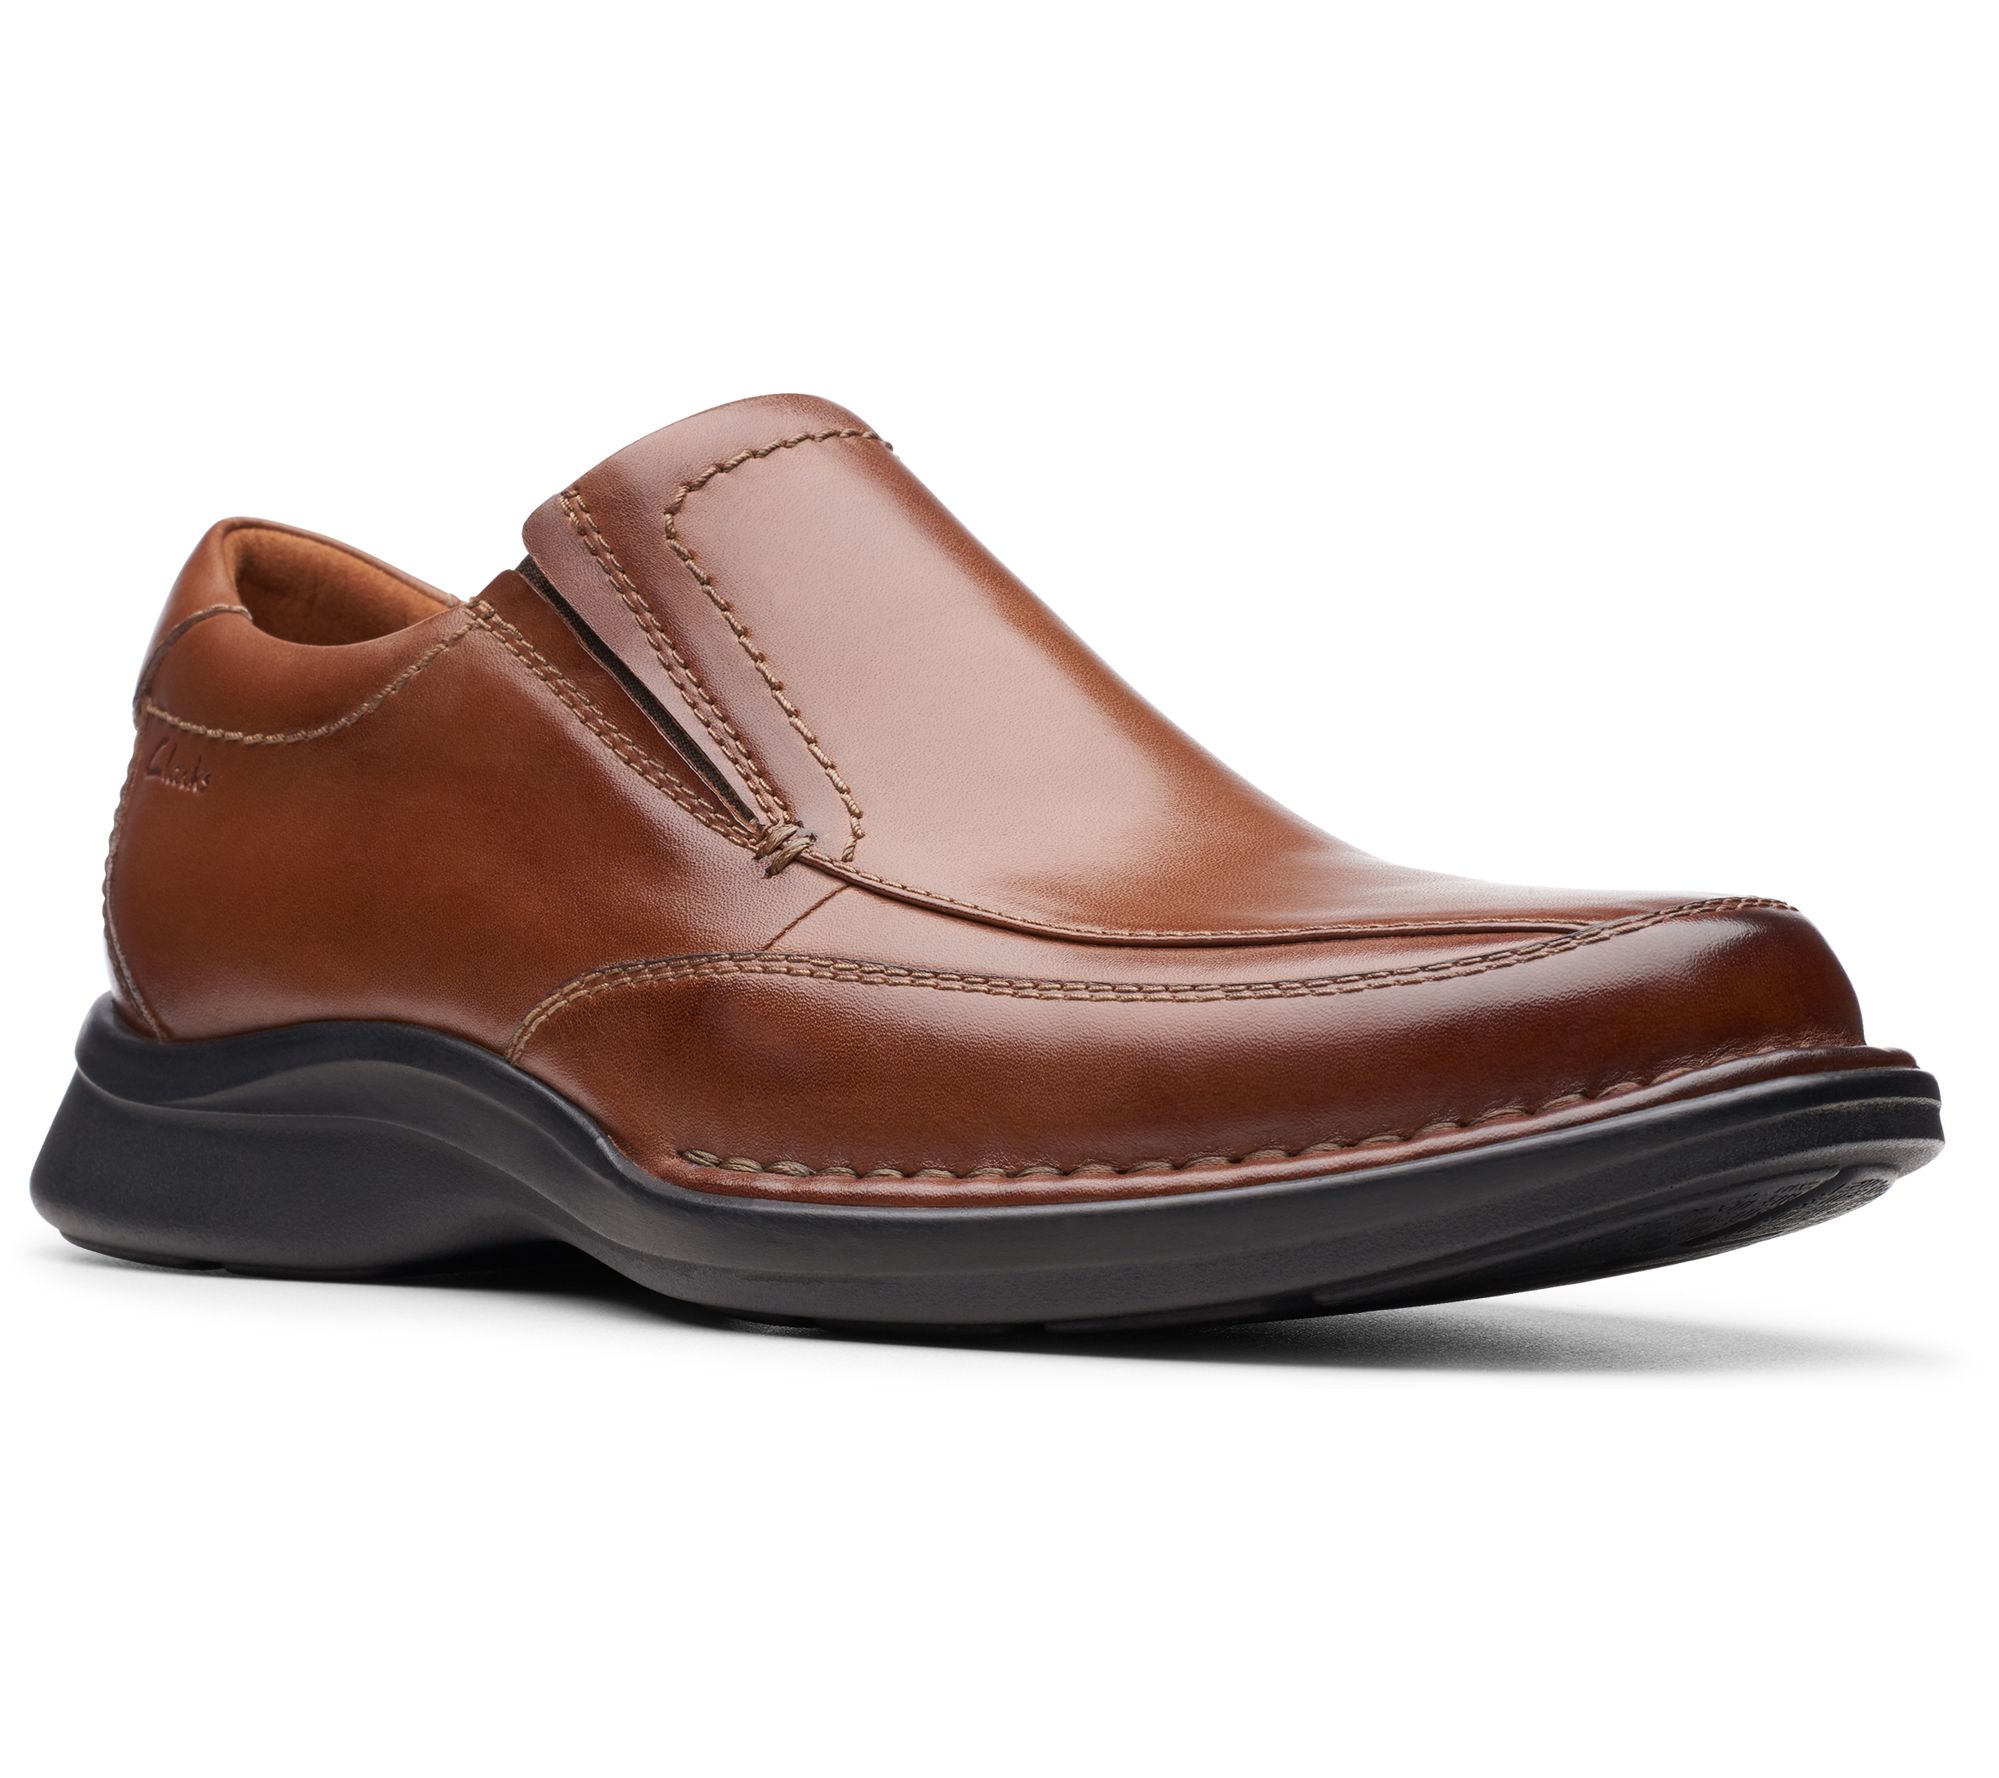 Leather Slip-Ons Shoes- Kempton 